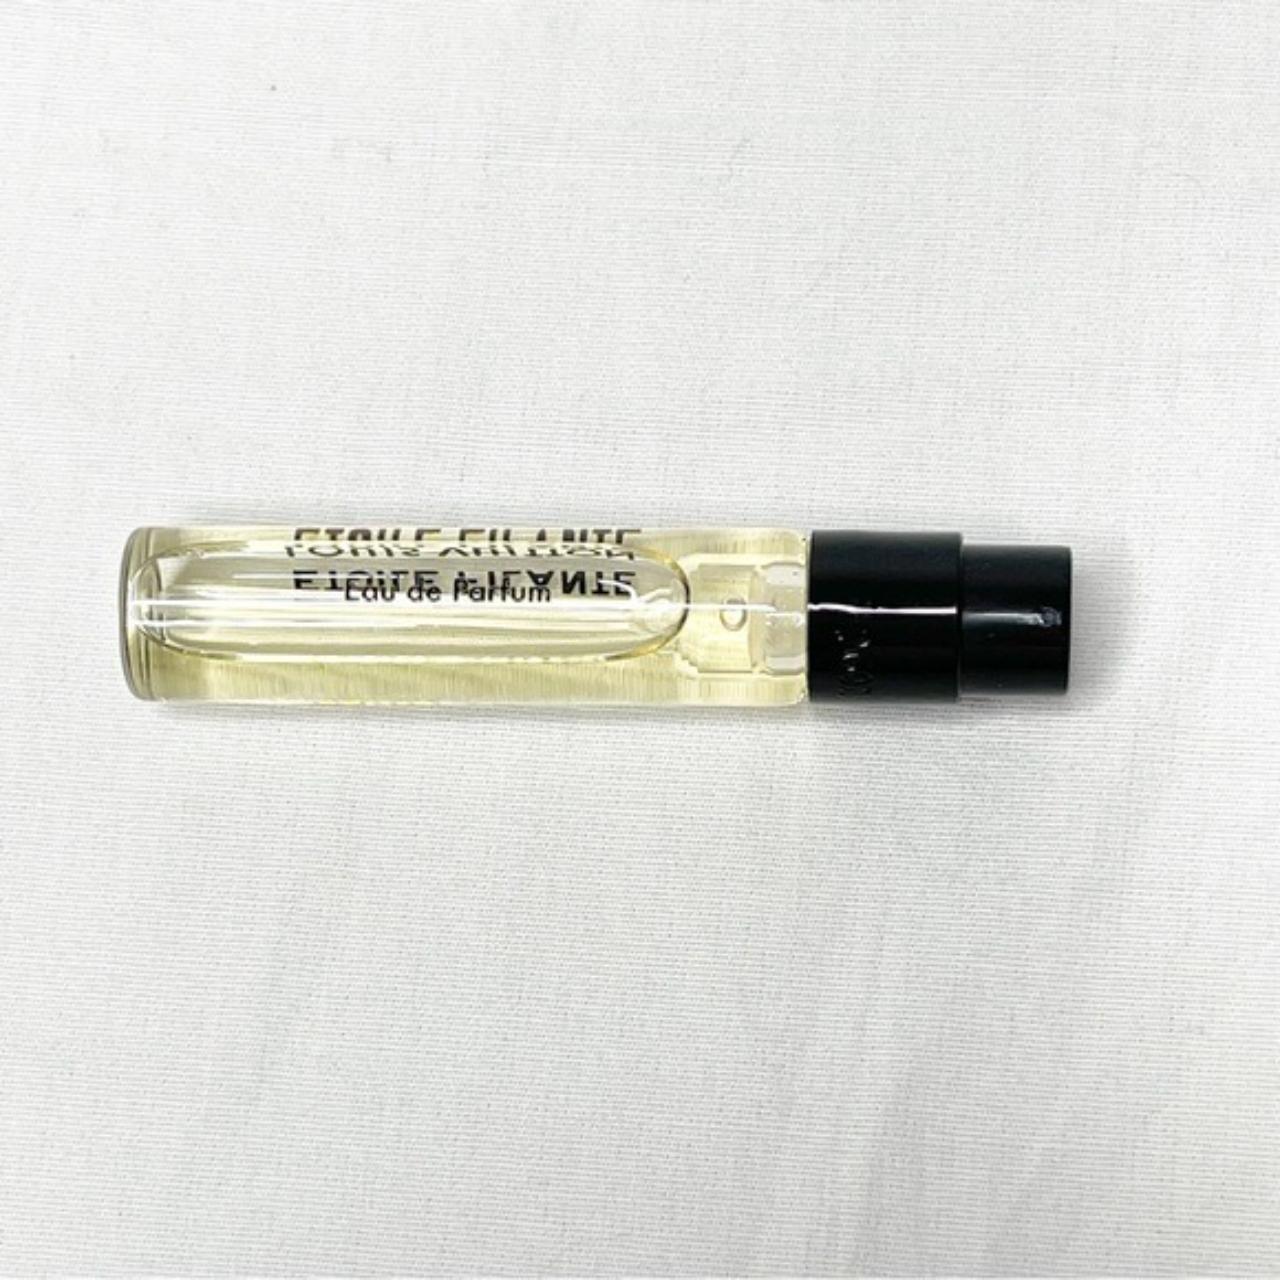 NEW Louis Vuitton Etoile Filante Sample Perfume 2ml - Depop